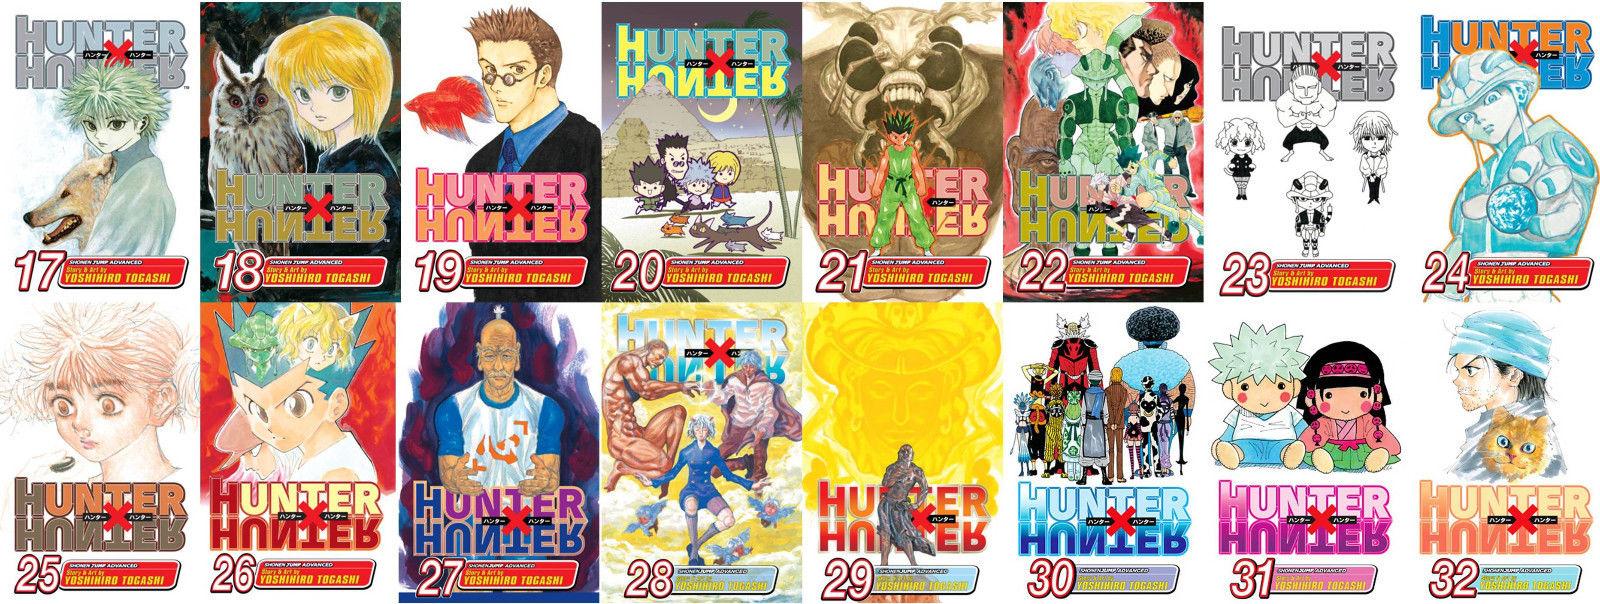 Hunter X Hunter Series Manga By Yoshihiro Togashi Collection Set 17 32 By Togashi Yoshihiro New Paperback Lakeside Books